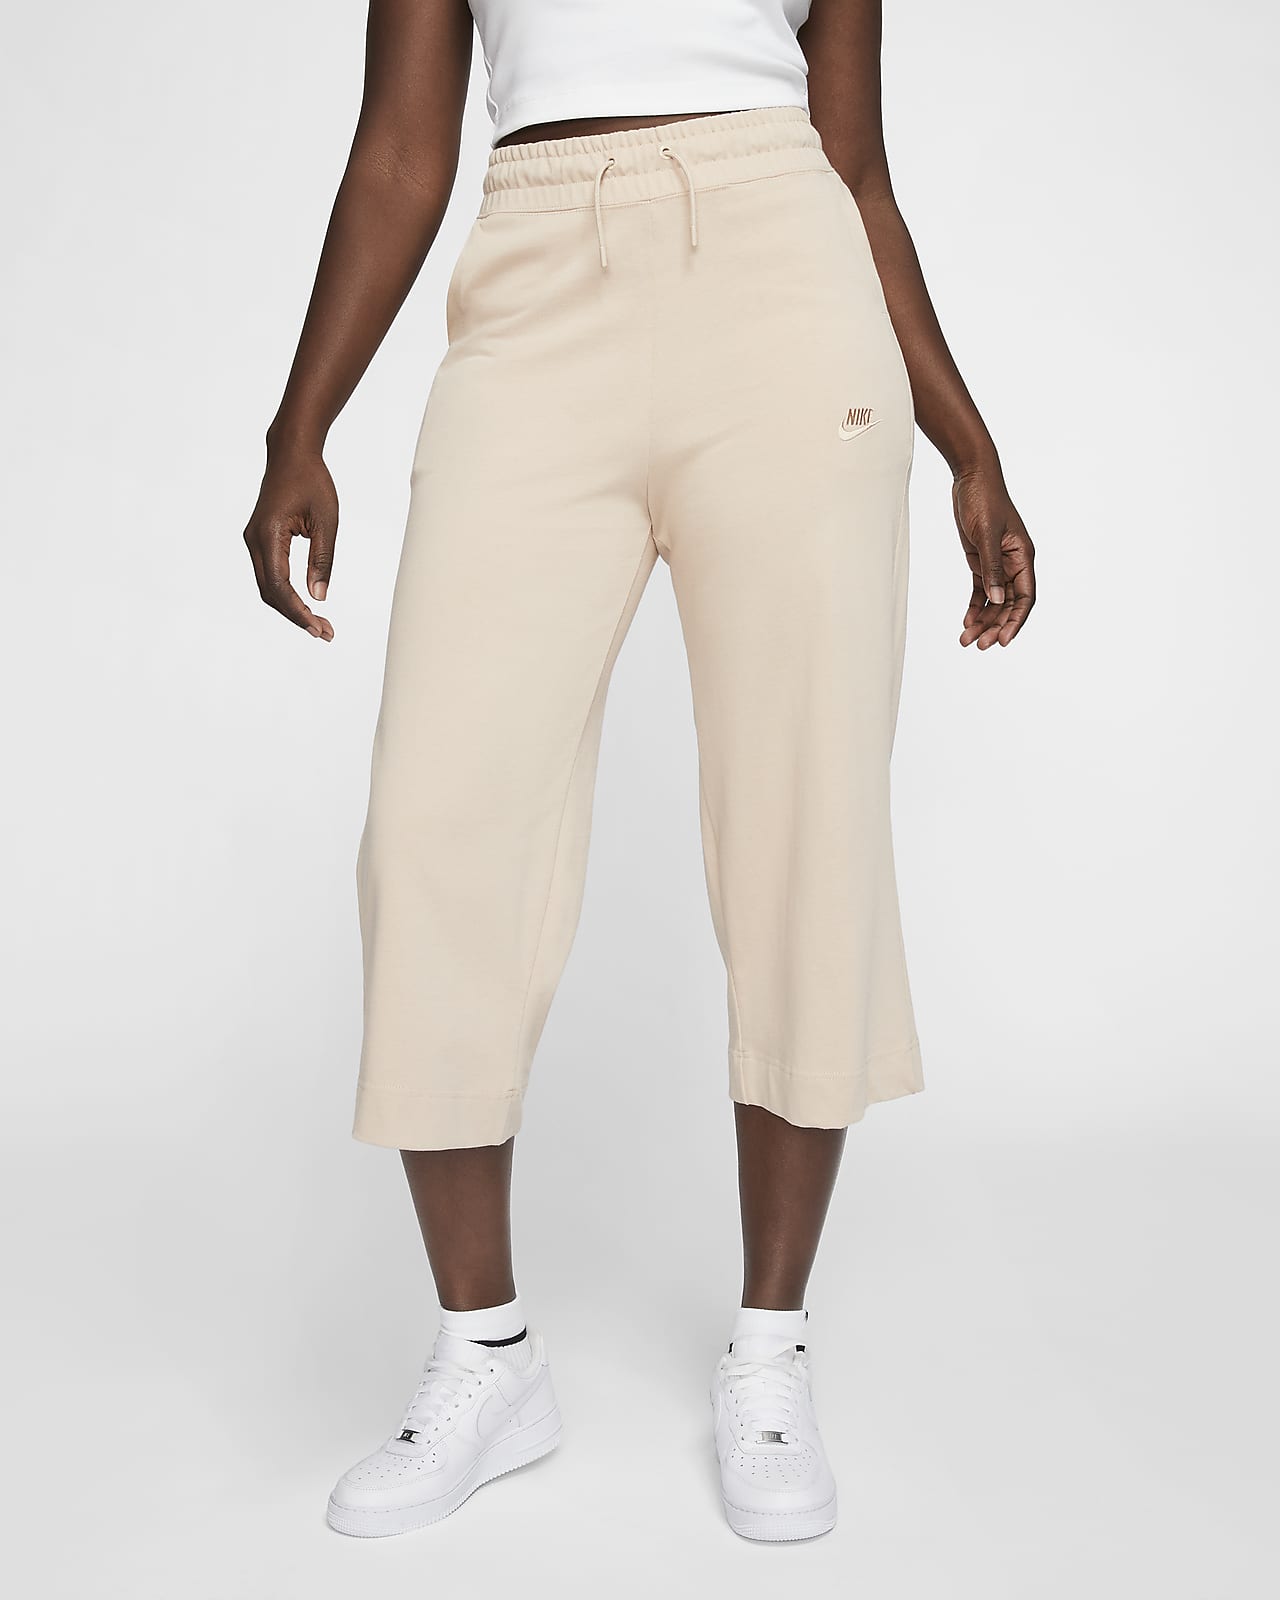 Pantalones capri de tejido de punto para mujer Nike Sportswear. Nike.com